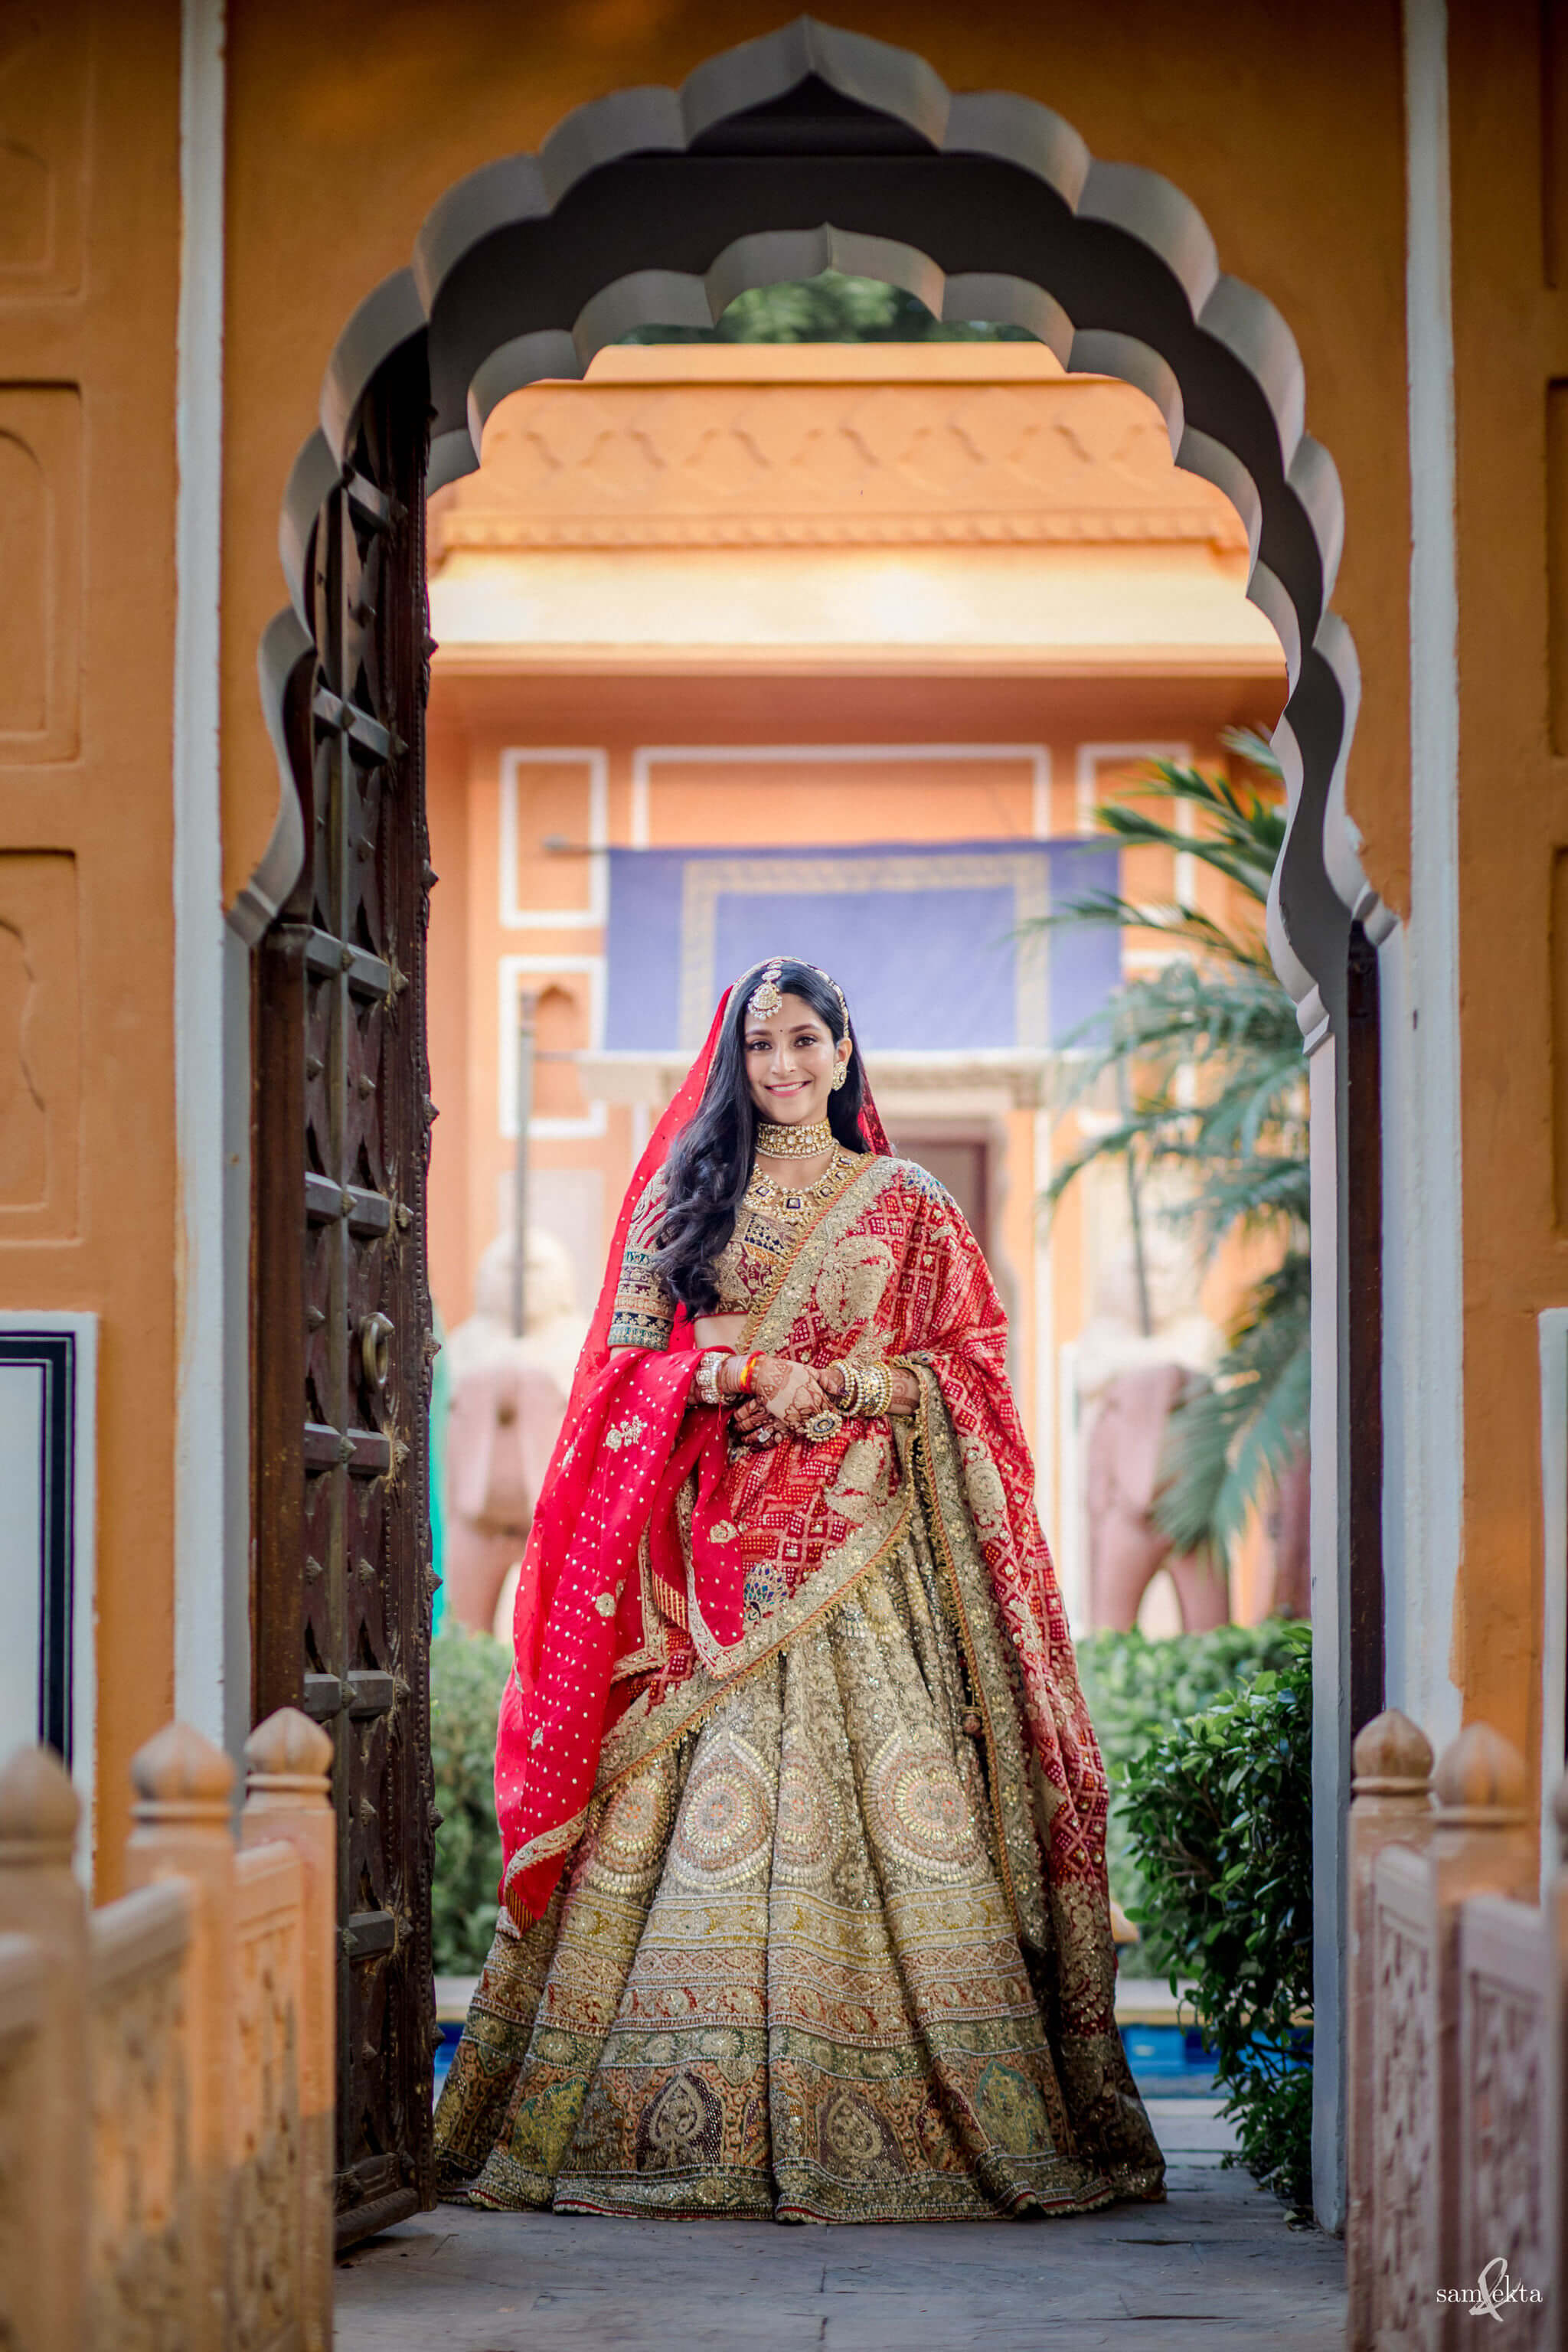 Rajasthani Blog - Best Indian Wedding Blog | WeddingBazaar